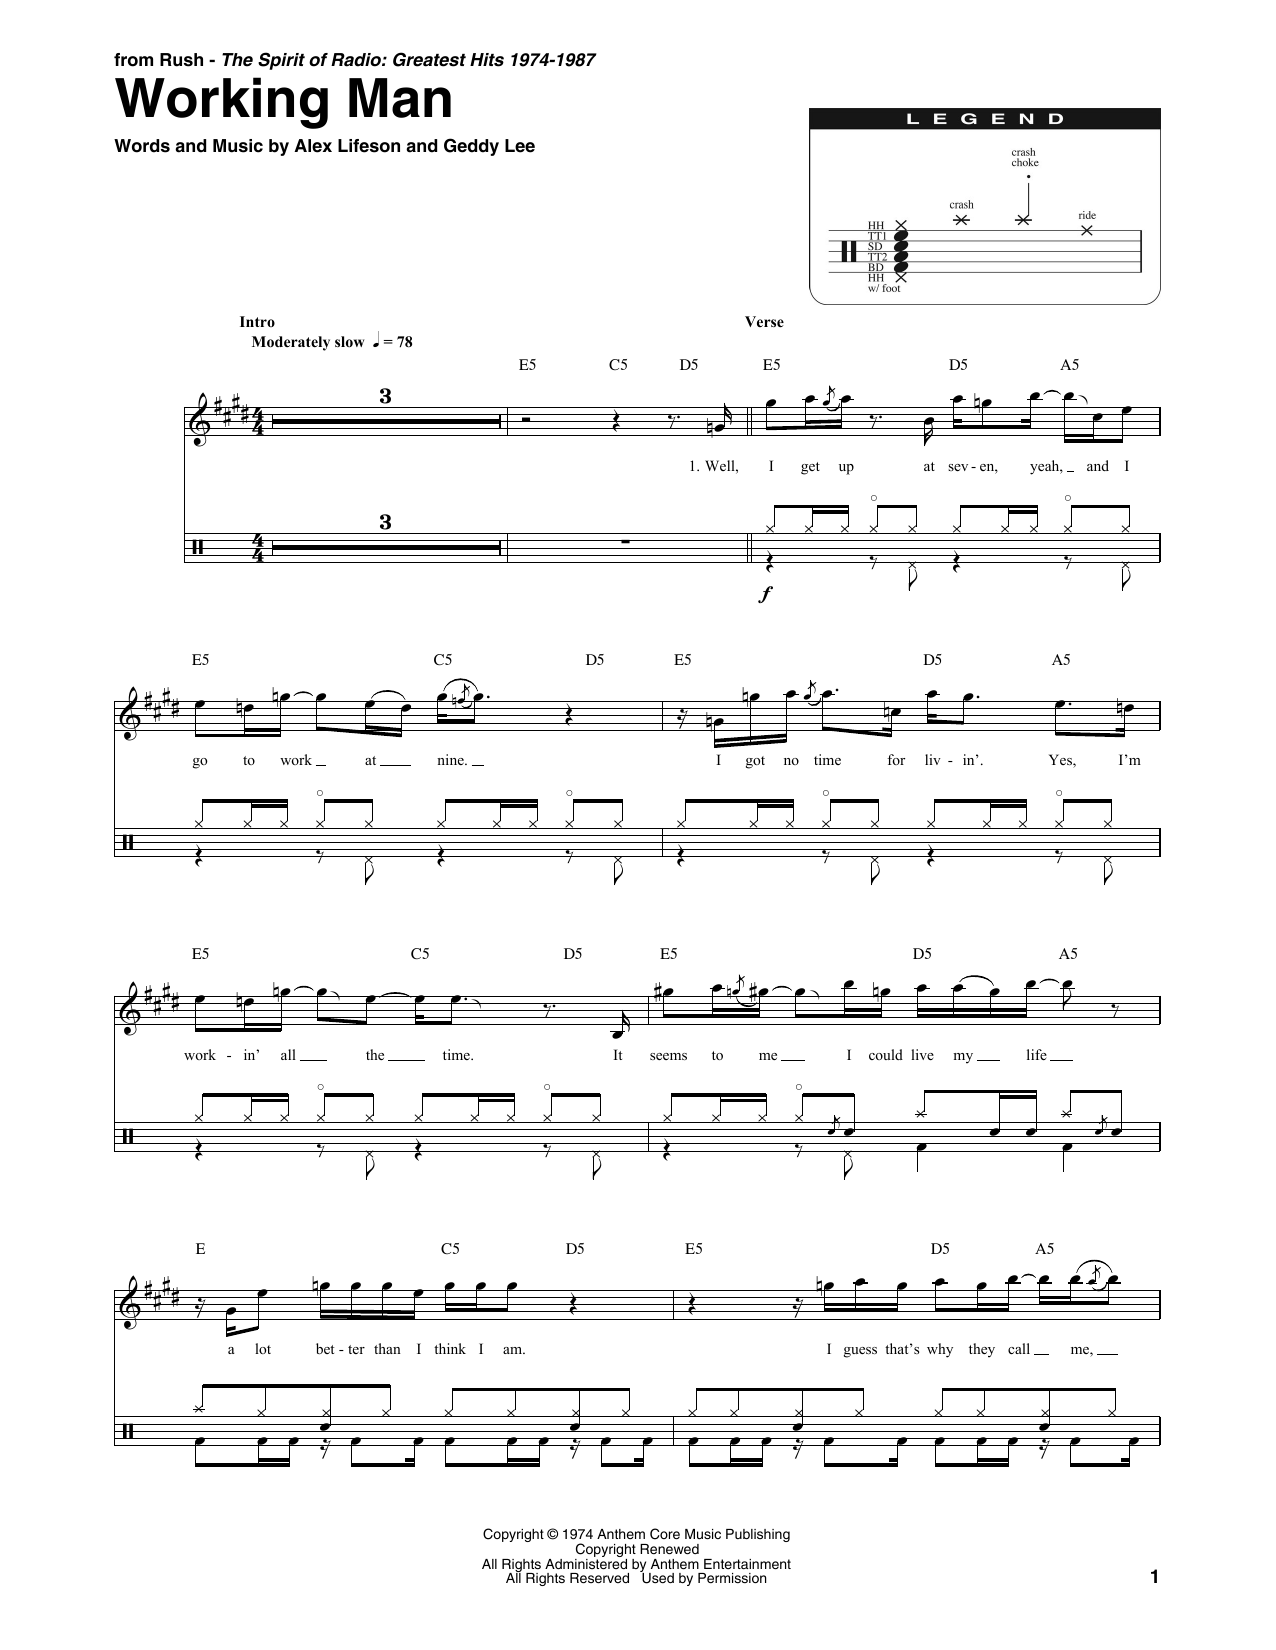 Rush Working Man Sheet Music Notes & Chords for Guitar Tab (Single Guitar) - Download or Print PDF